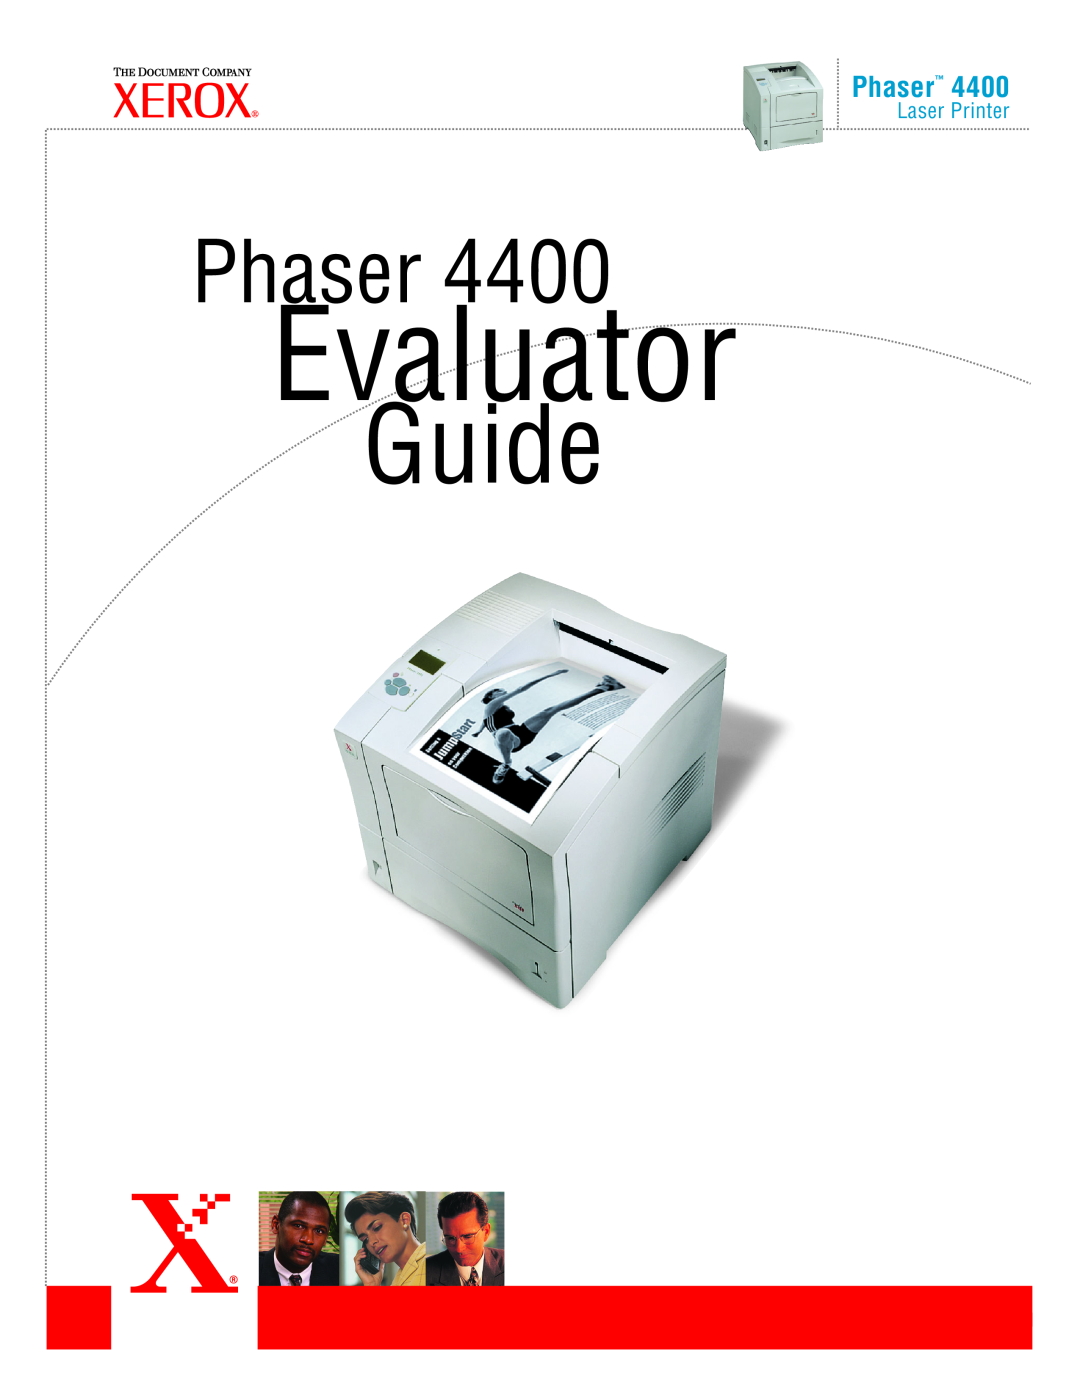 Xerox 4400 manual Phaser, Laser Printer, Evaluator Guide 